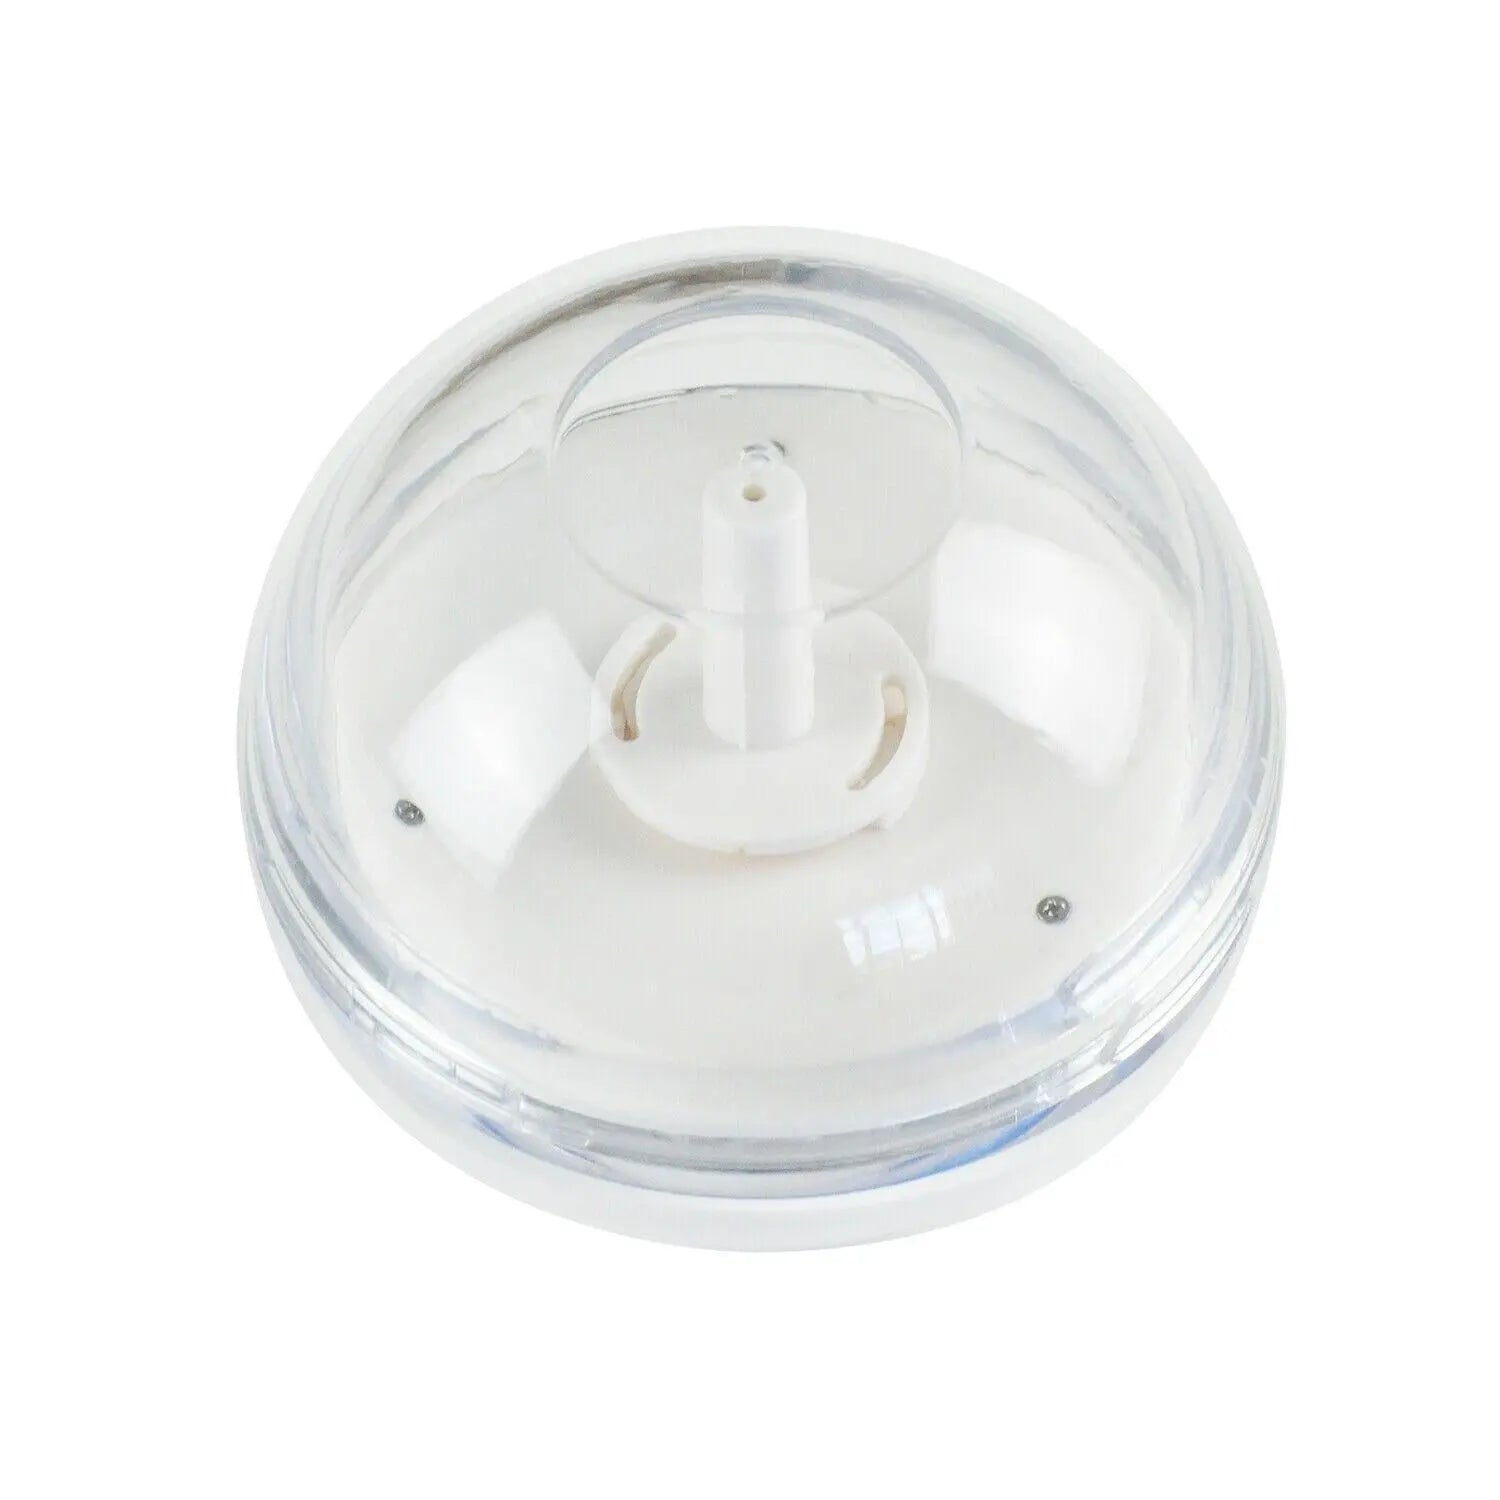 USB Air Humidifier Ultrasonic LED Crystal Nightlights Mist Diffuser Purifier Deals499